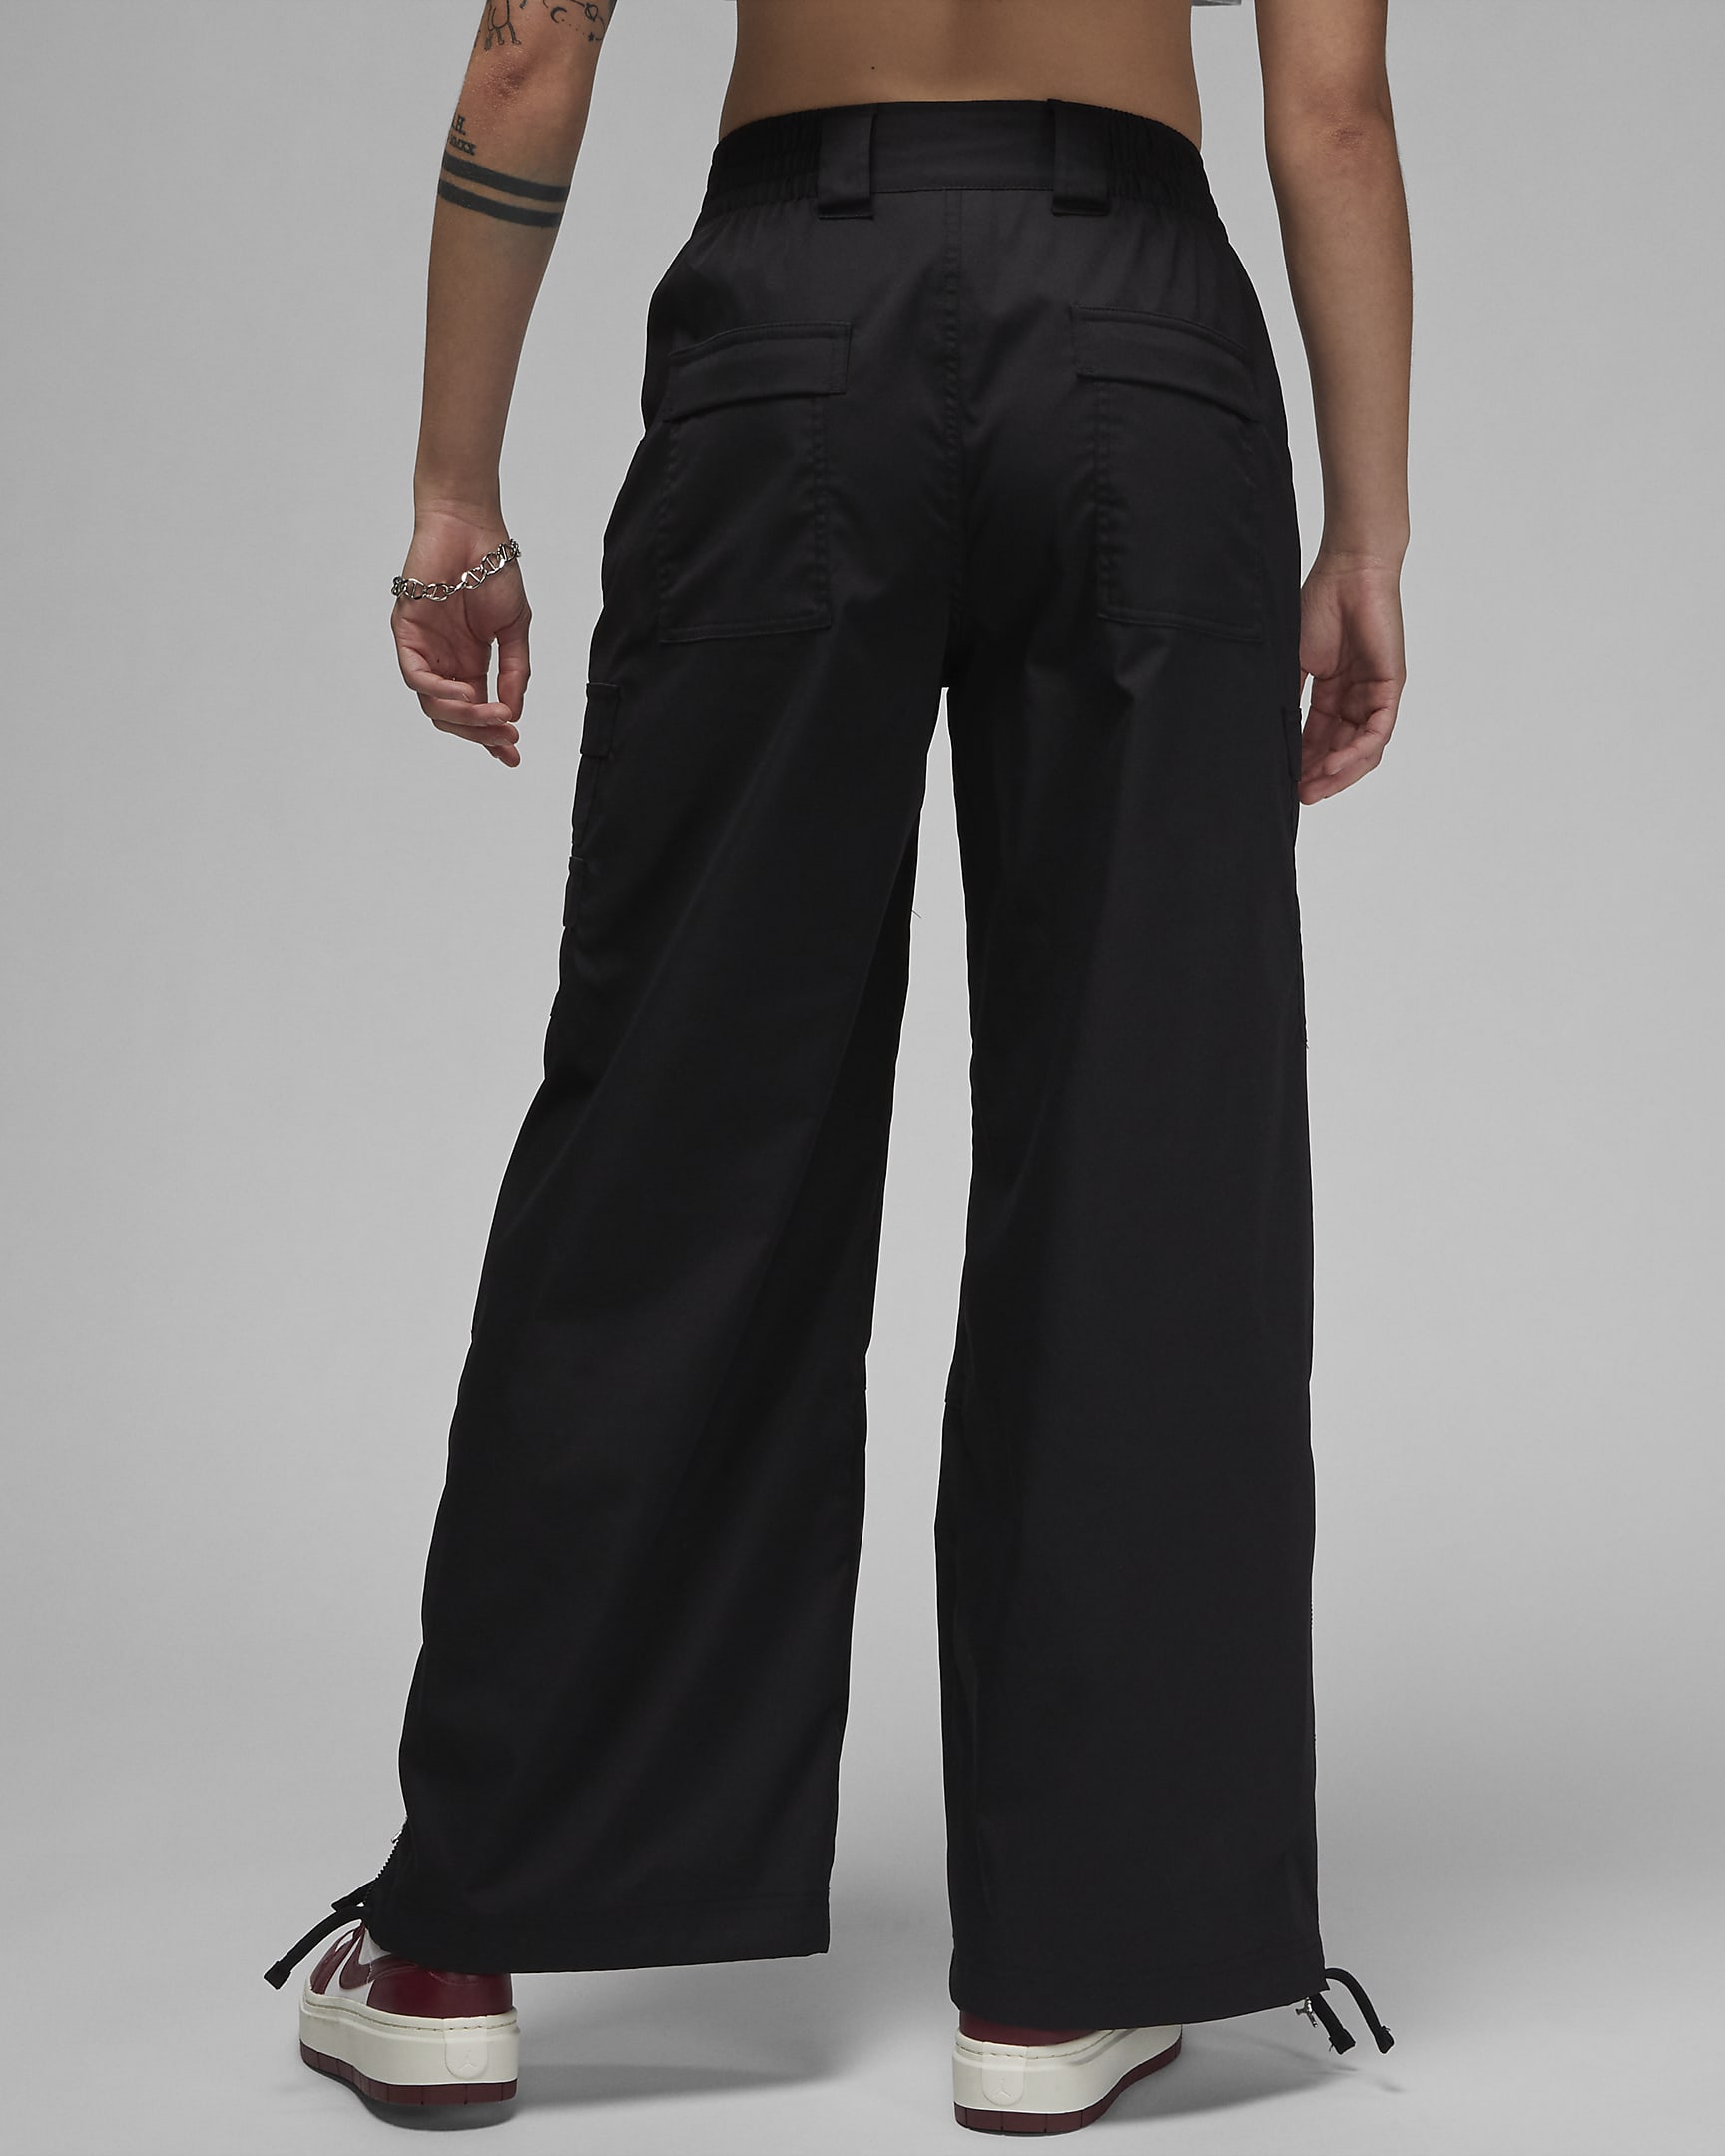 Jordan Chicago Women's Trousers - Black